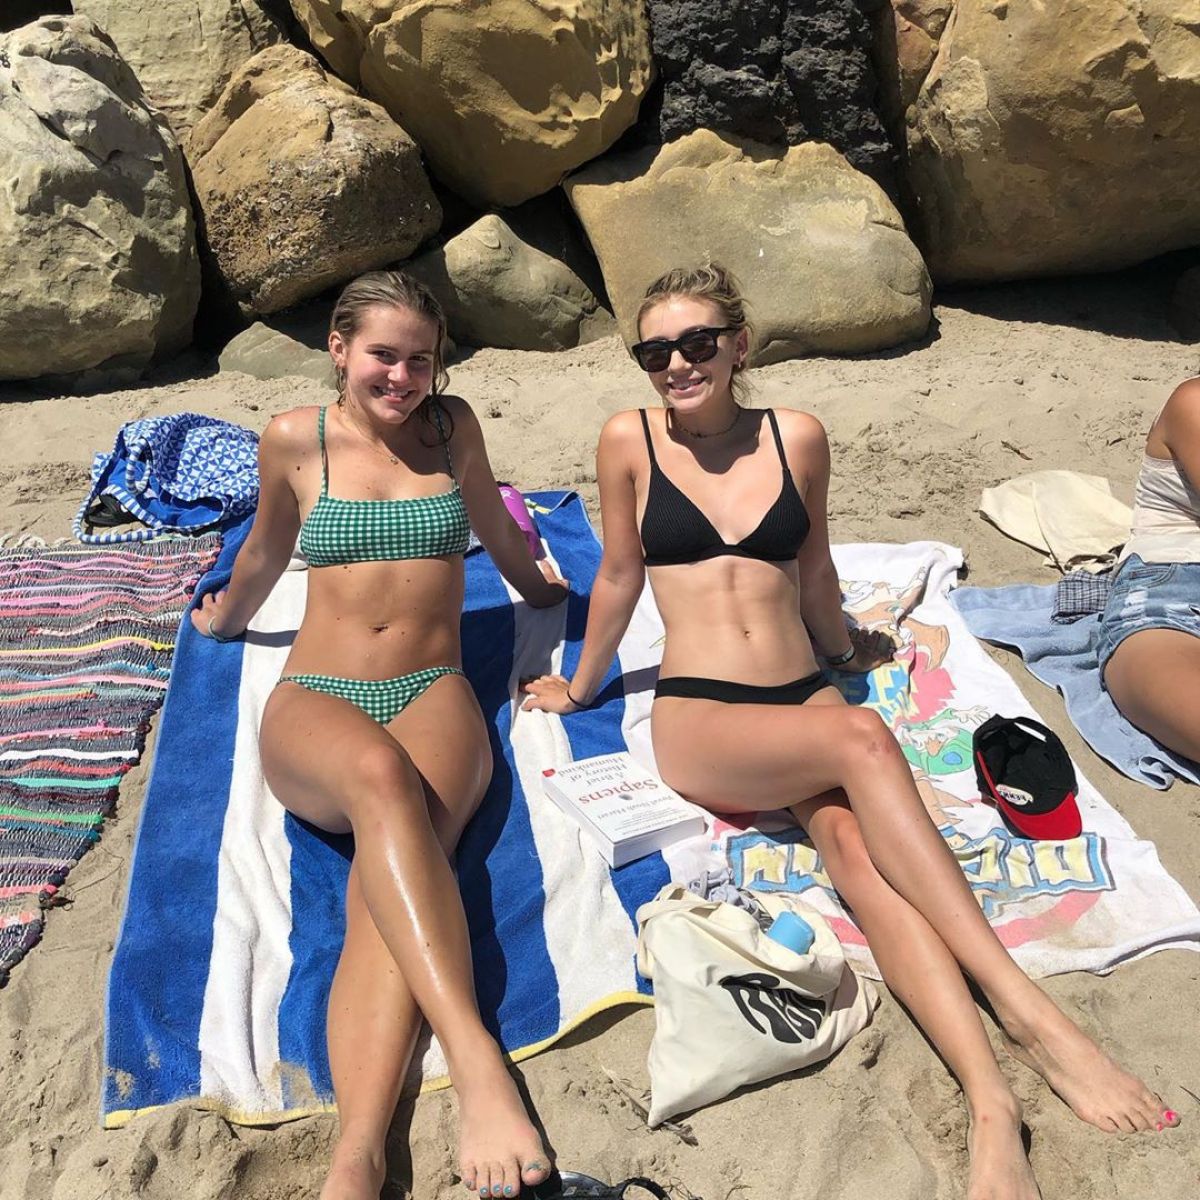 GENEVIEVE HANNELIUS and Friend in Bikinis - Instagram Photo 07/28/2019. 